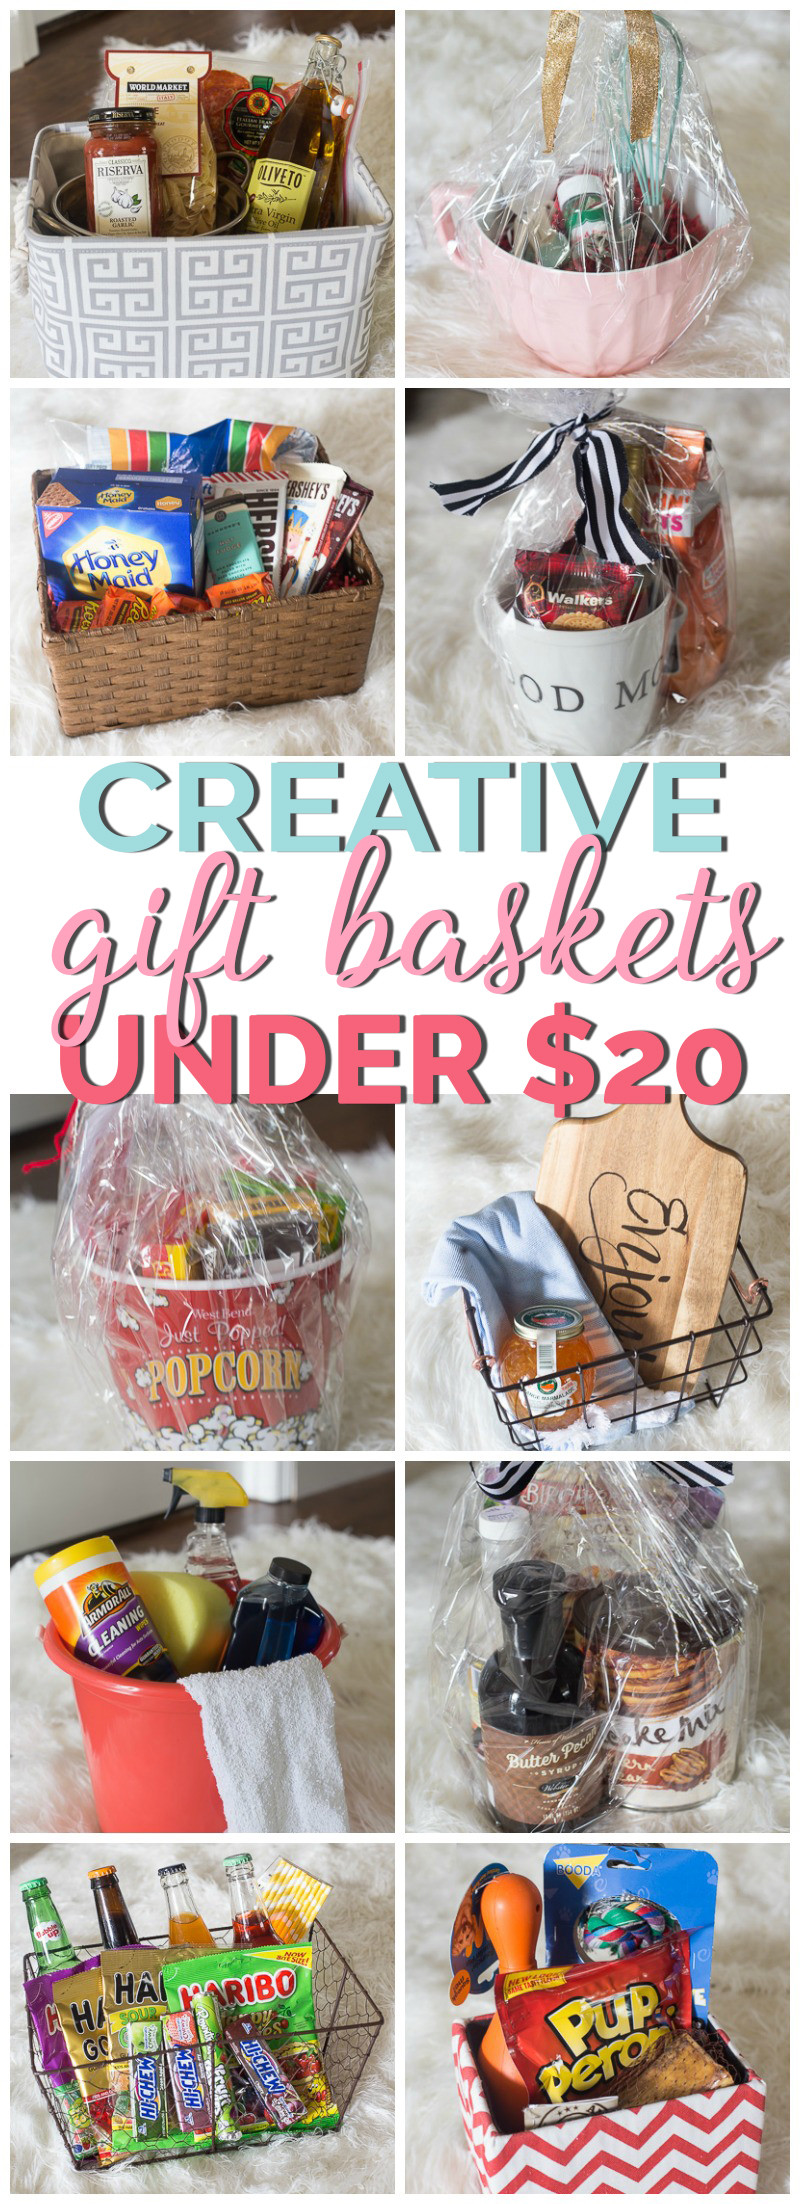 Office Holiday Gift Ideas Under 20
 Creative Gift Basket Ideas Under $20